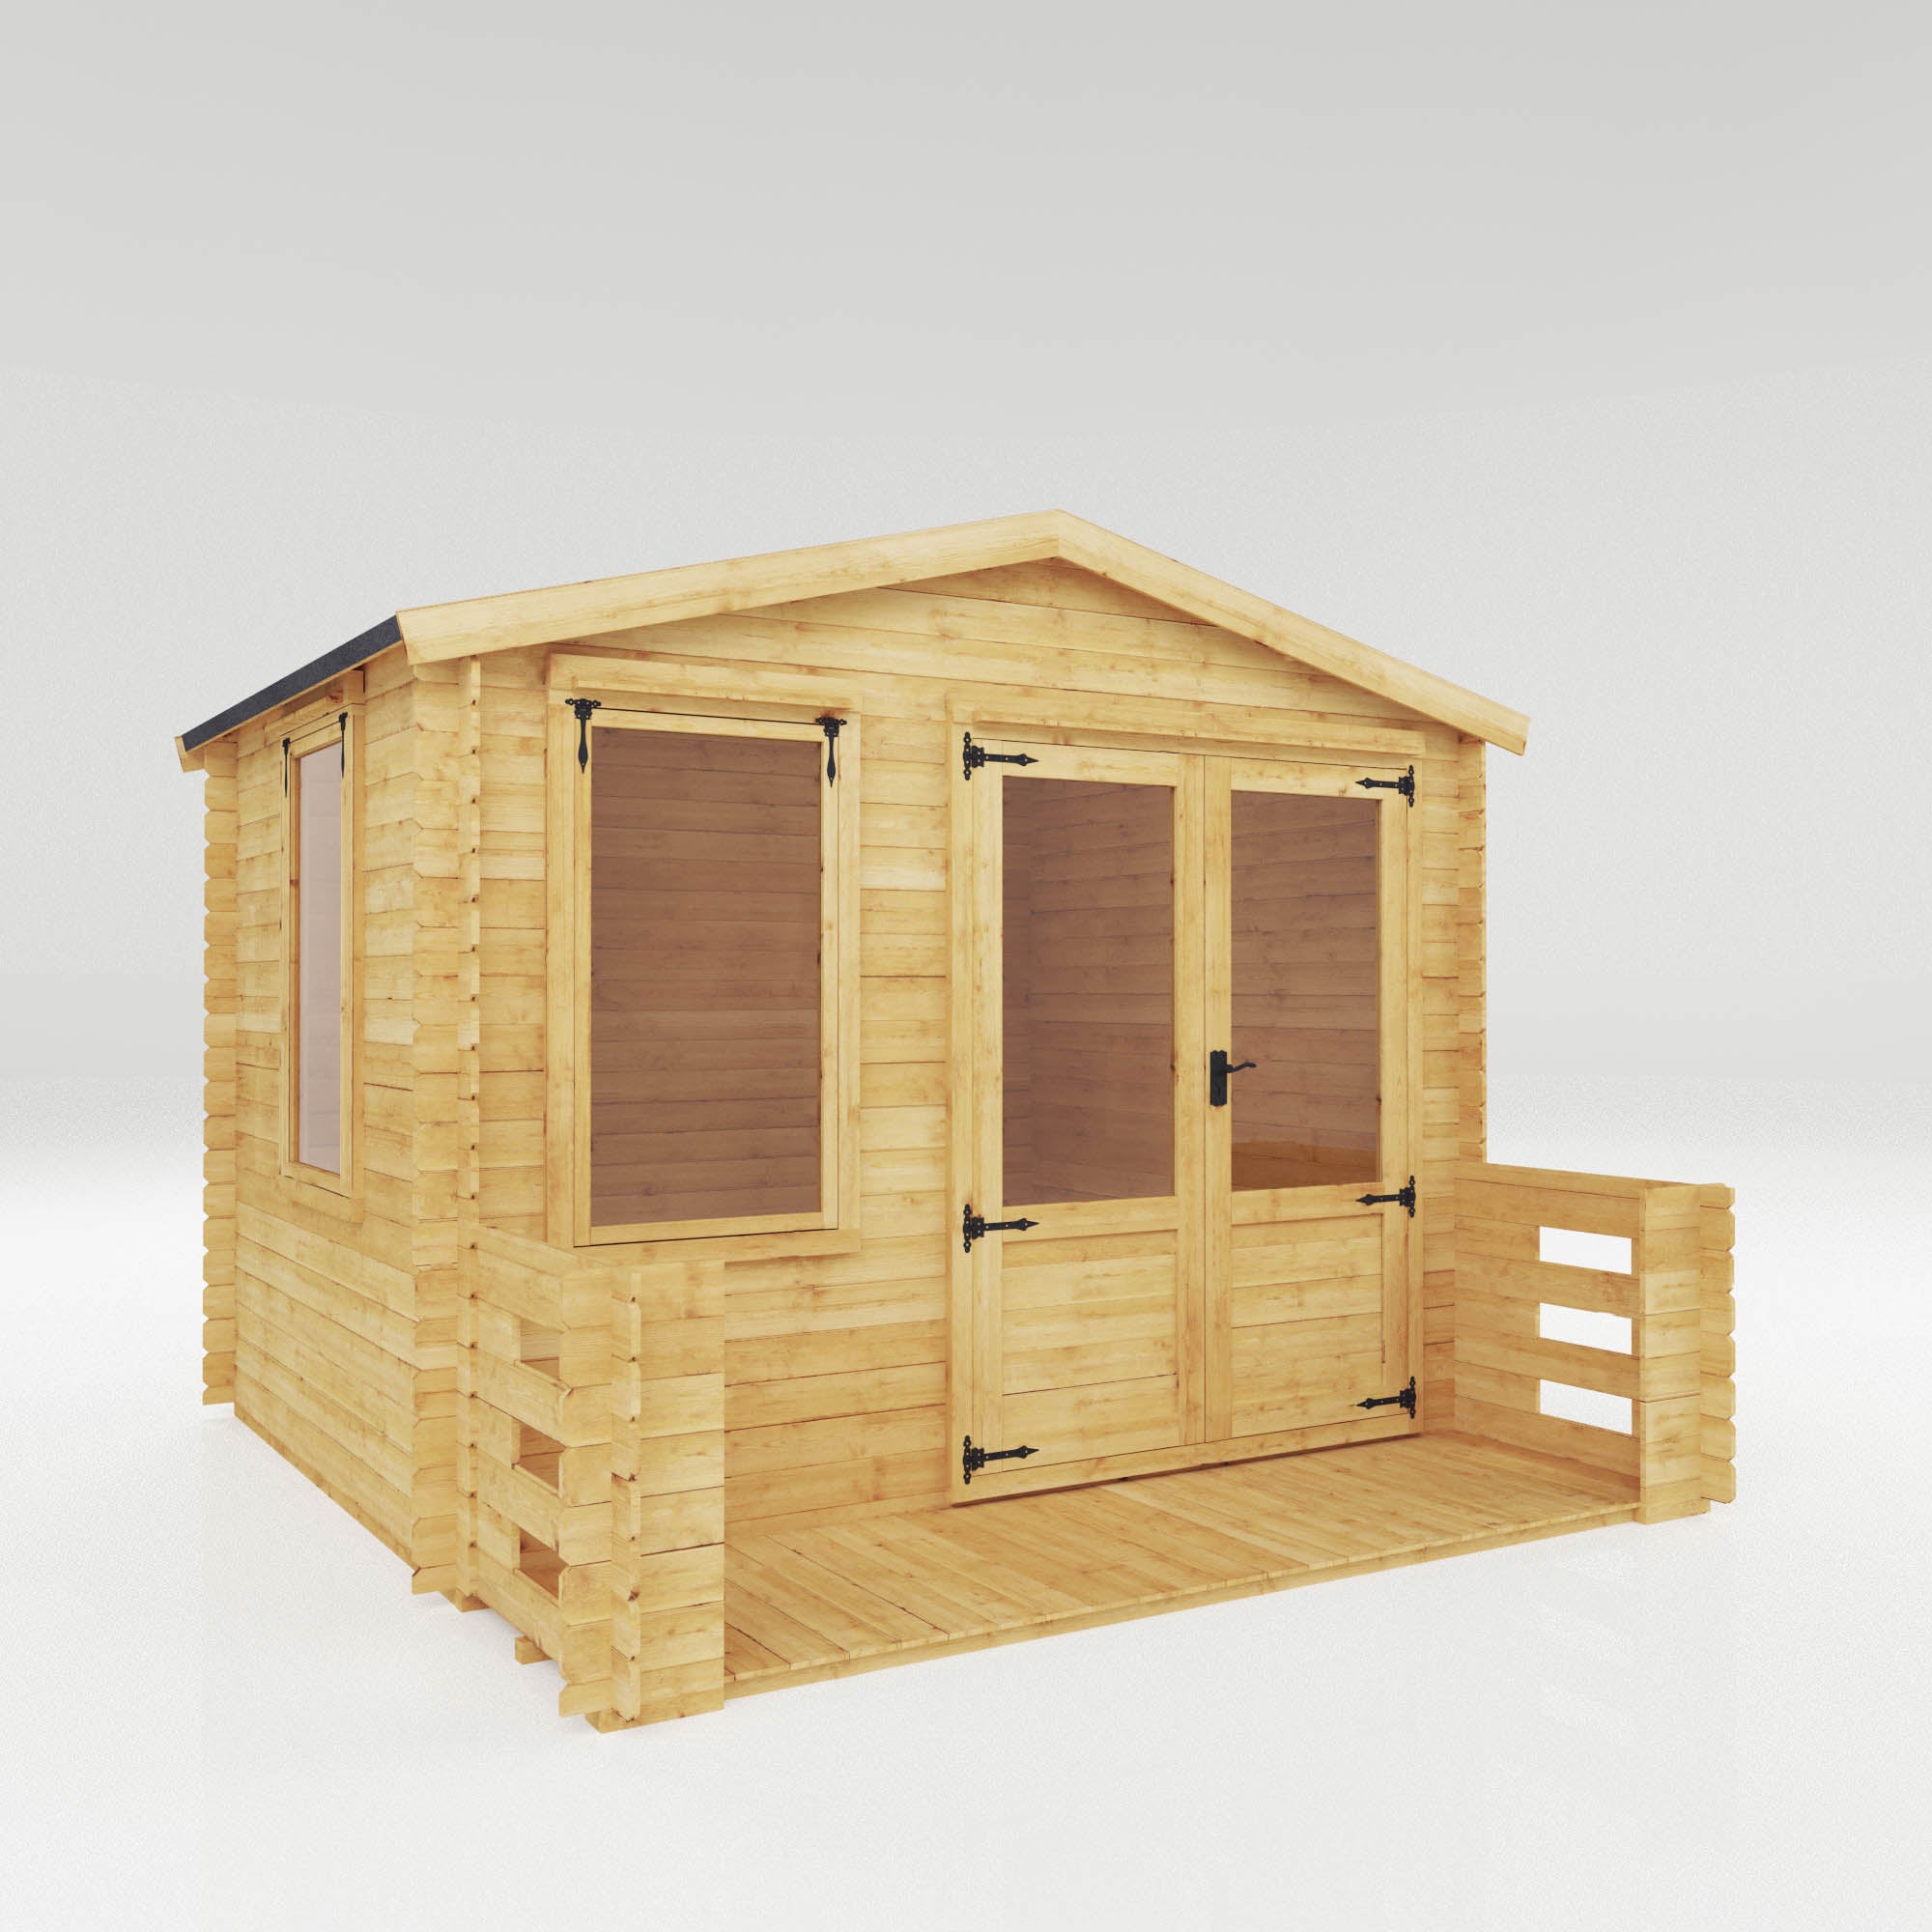 3.3m x 3.4m Log cabin with Veranda - 19mm